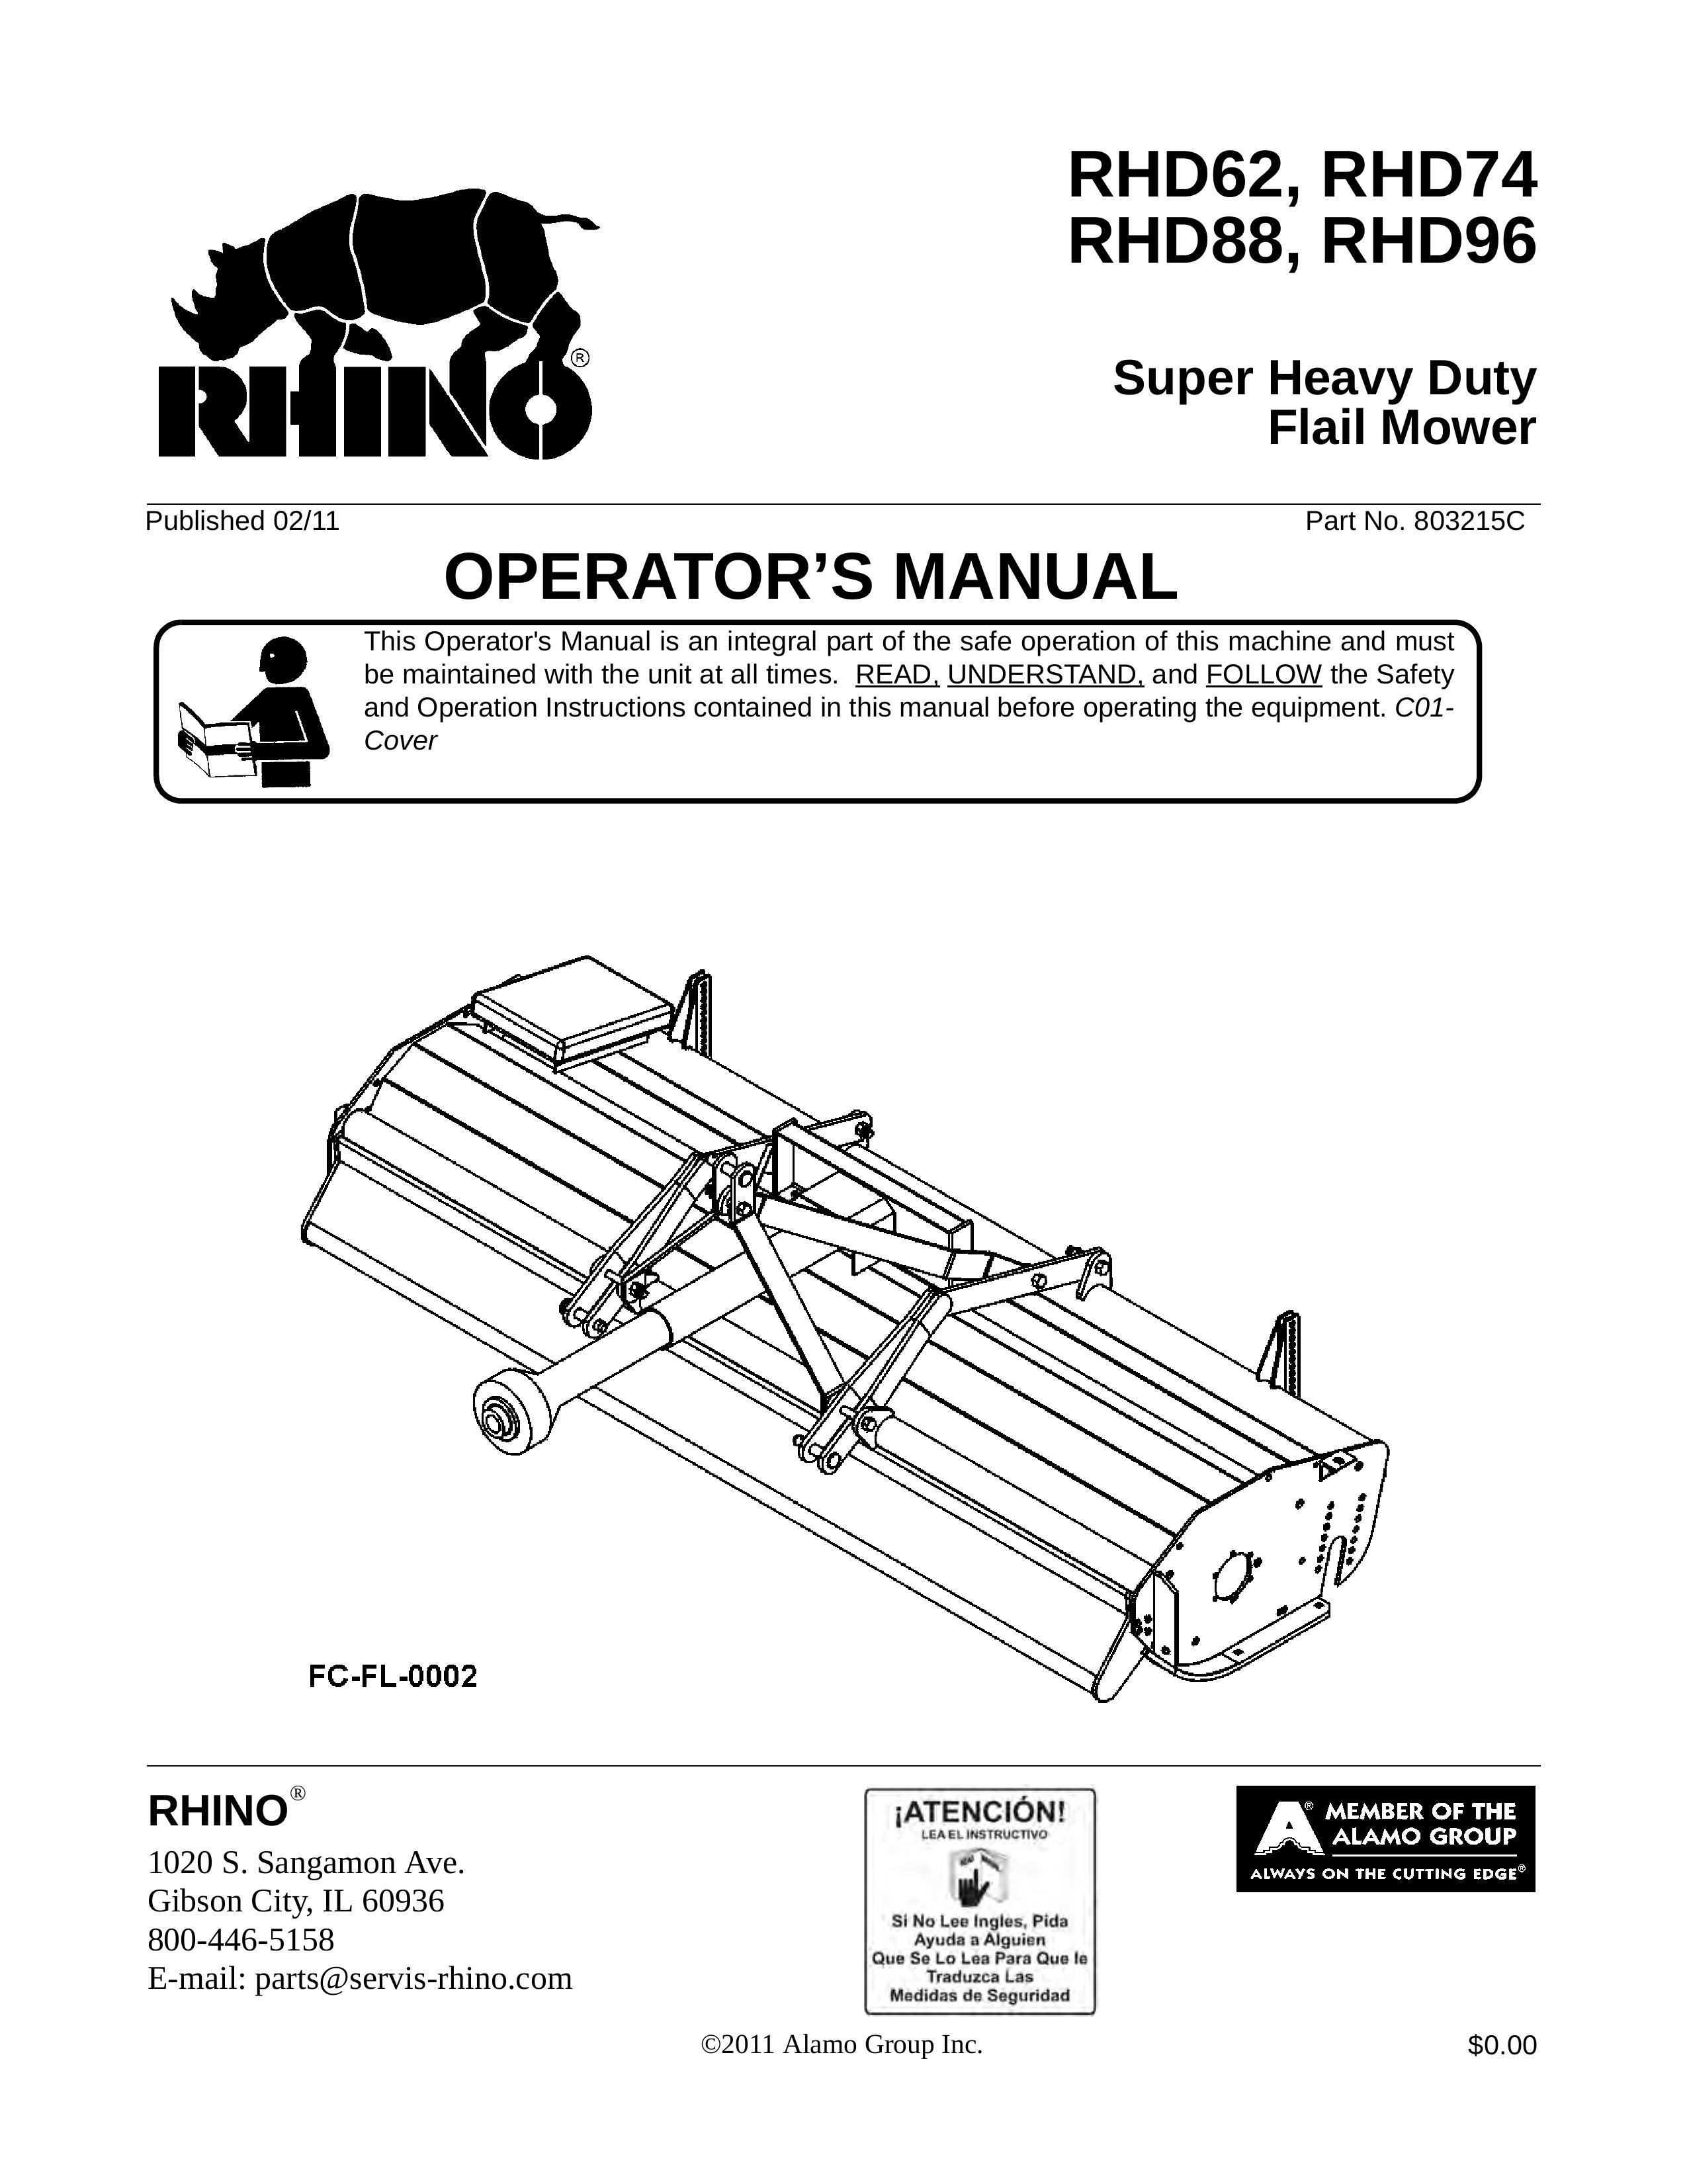 Rhino Mounts RHD88 Lawn Mower User Manual